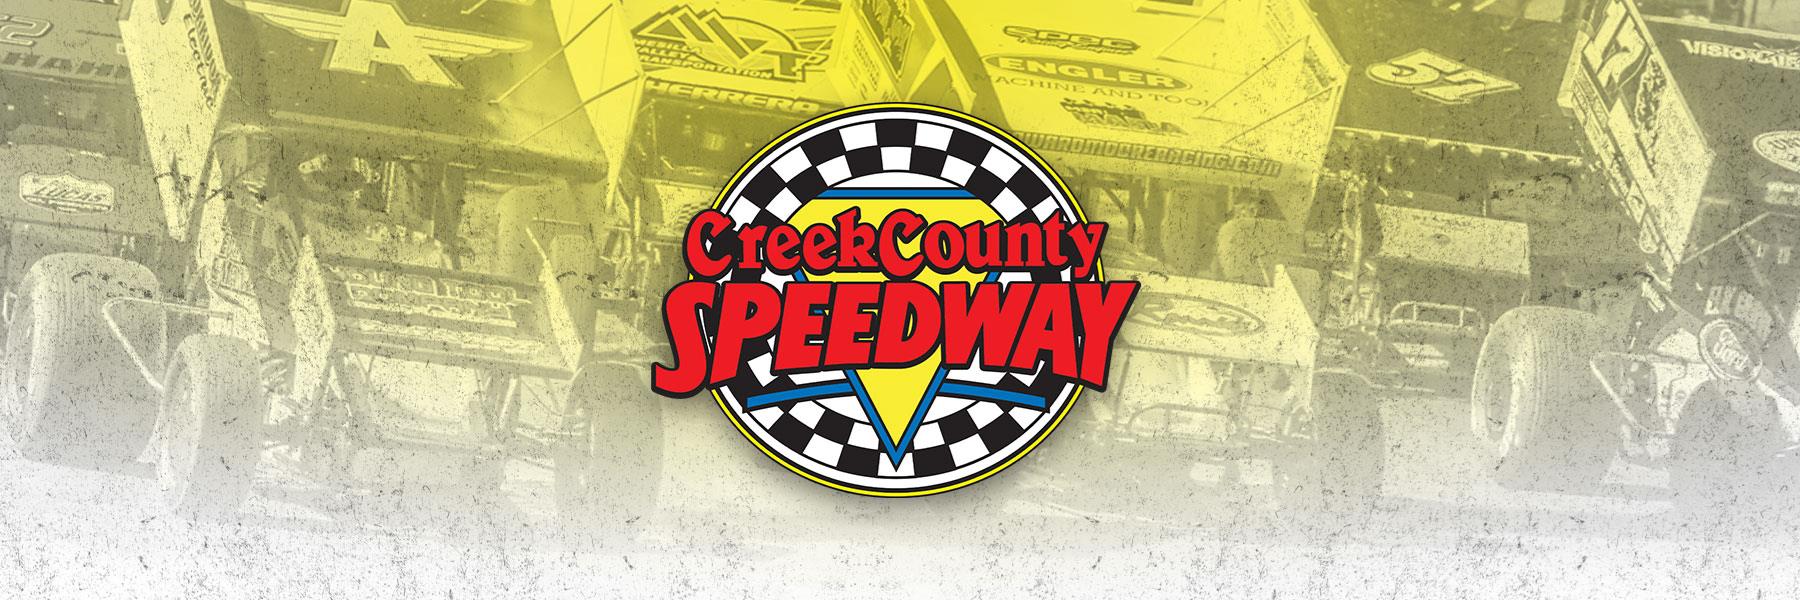 10/29/2021 - Creek County Speedway